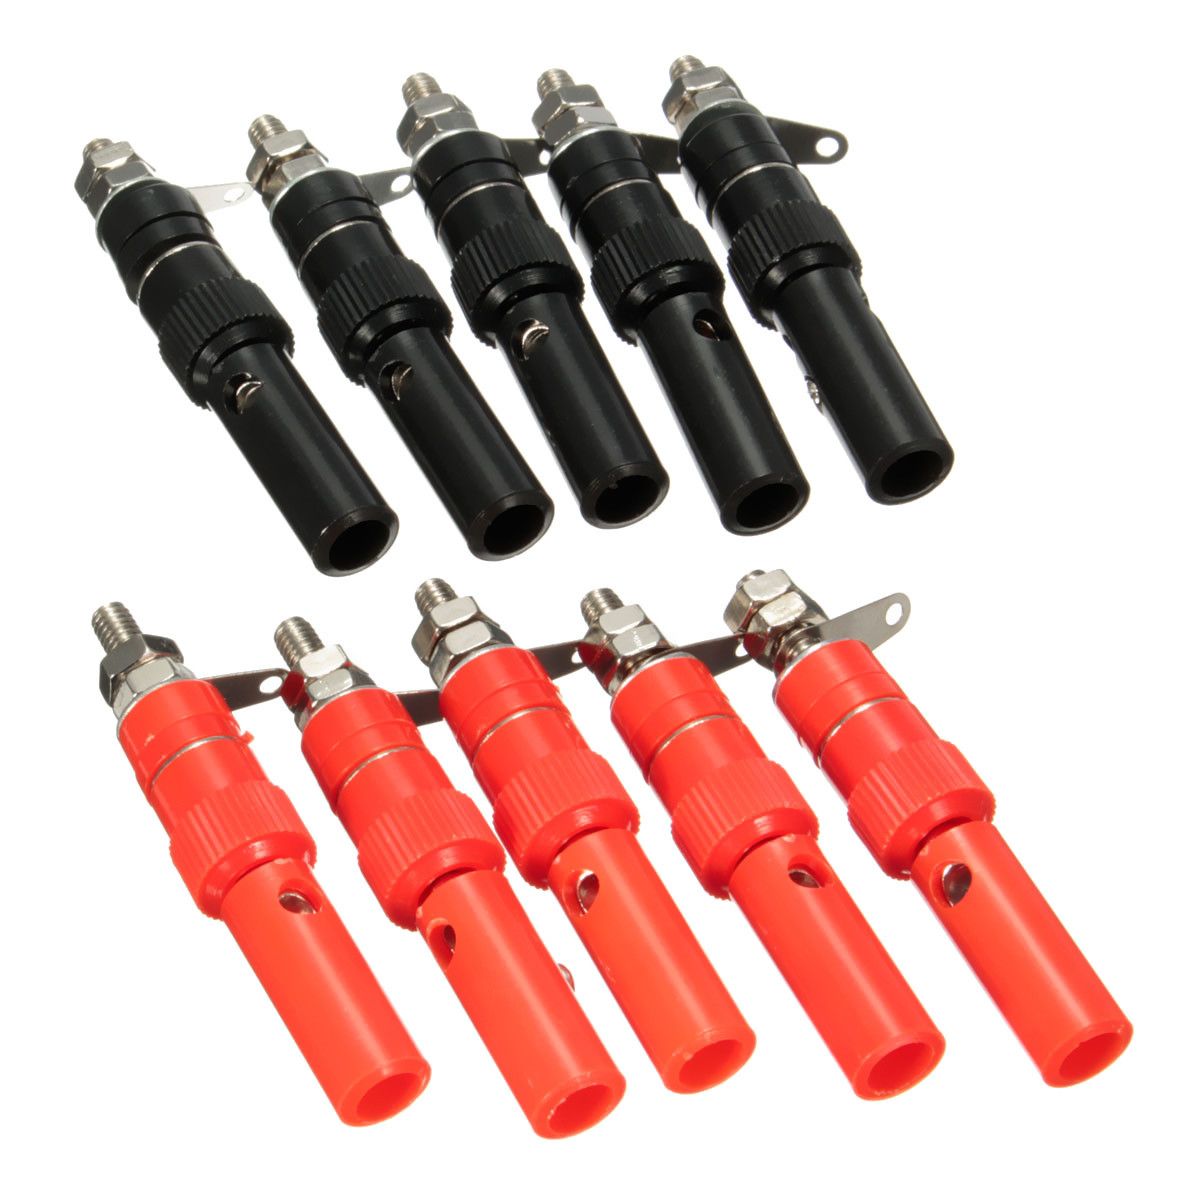 DANIU-50-Pairs-4mm-Terminal-Banana-Plug-Socket-Jack-Connectors-Instrument-Light-Tools-Black-and-Red-1358118